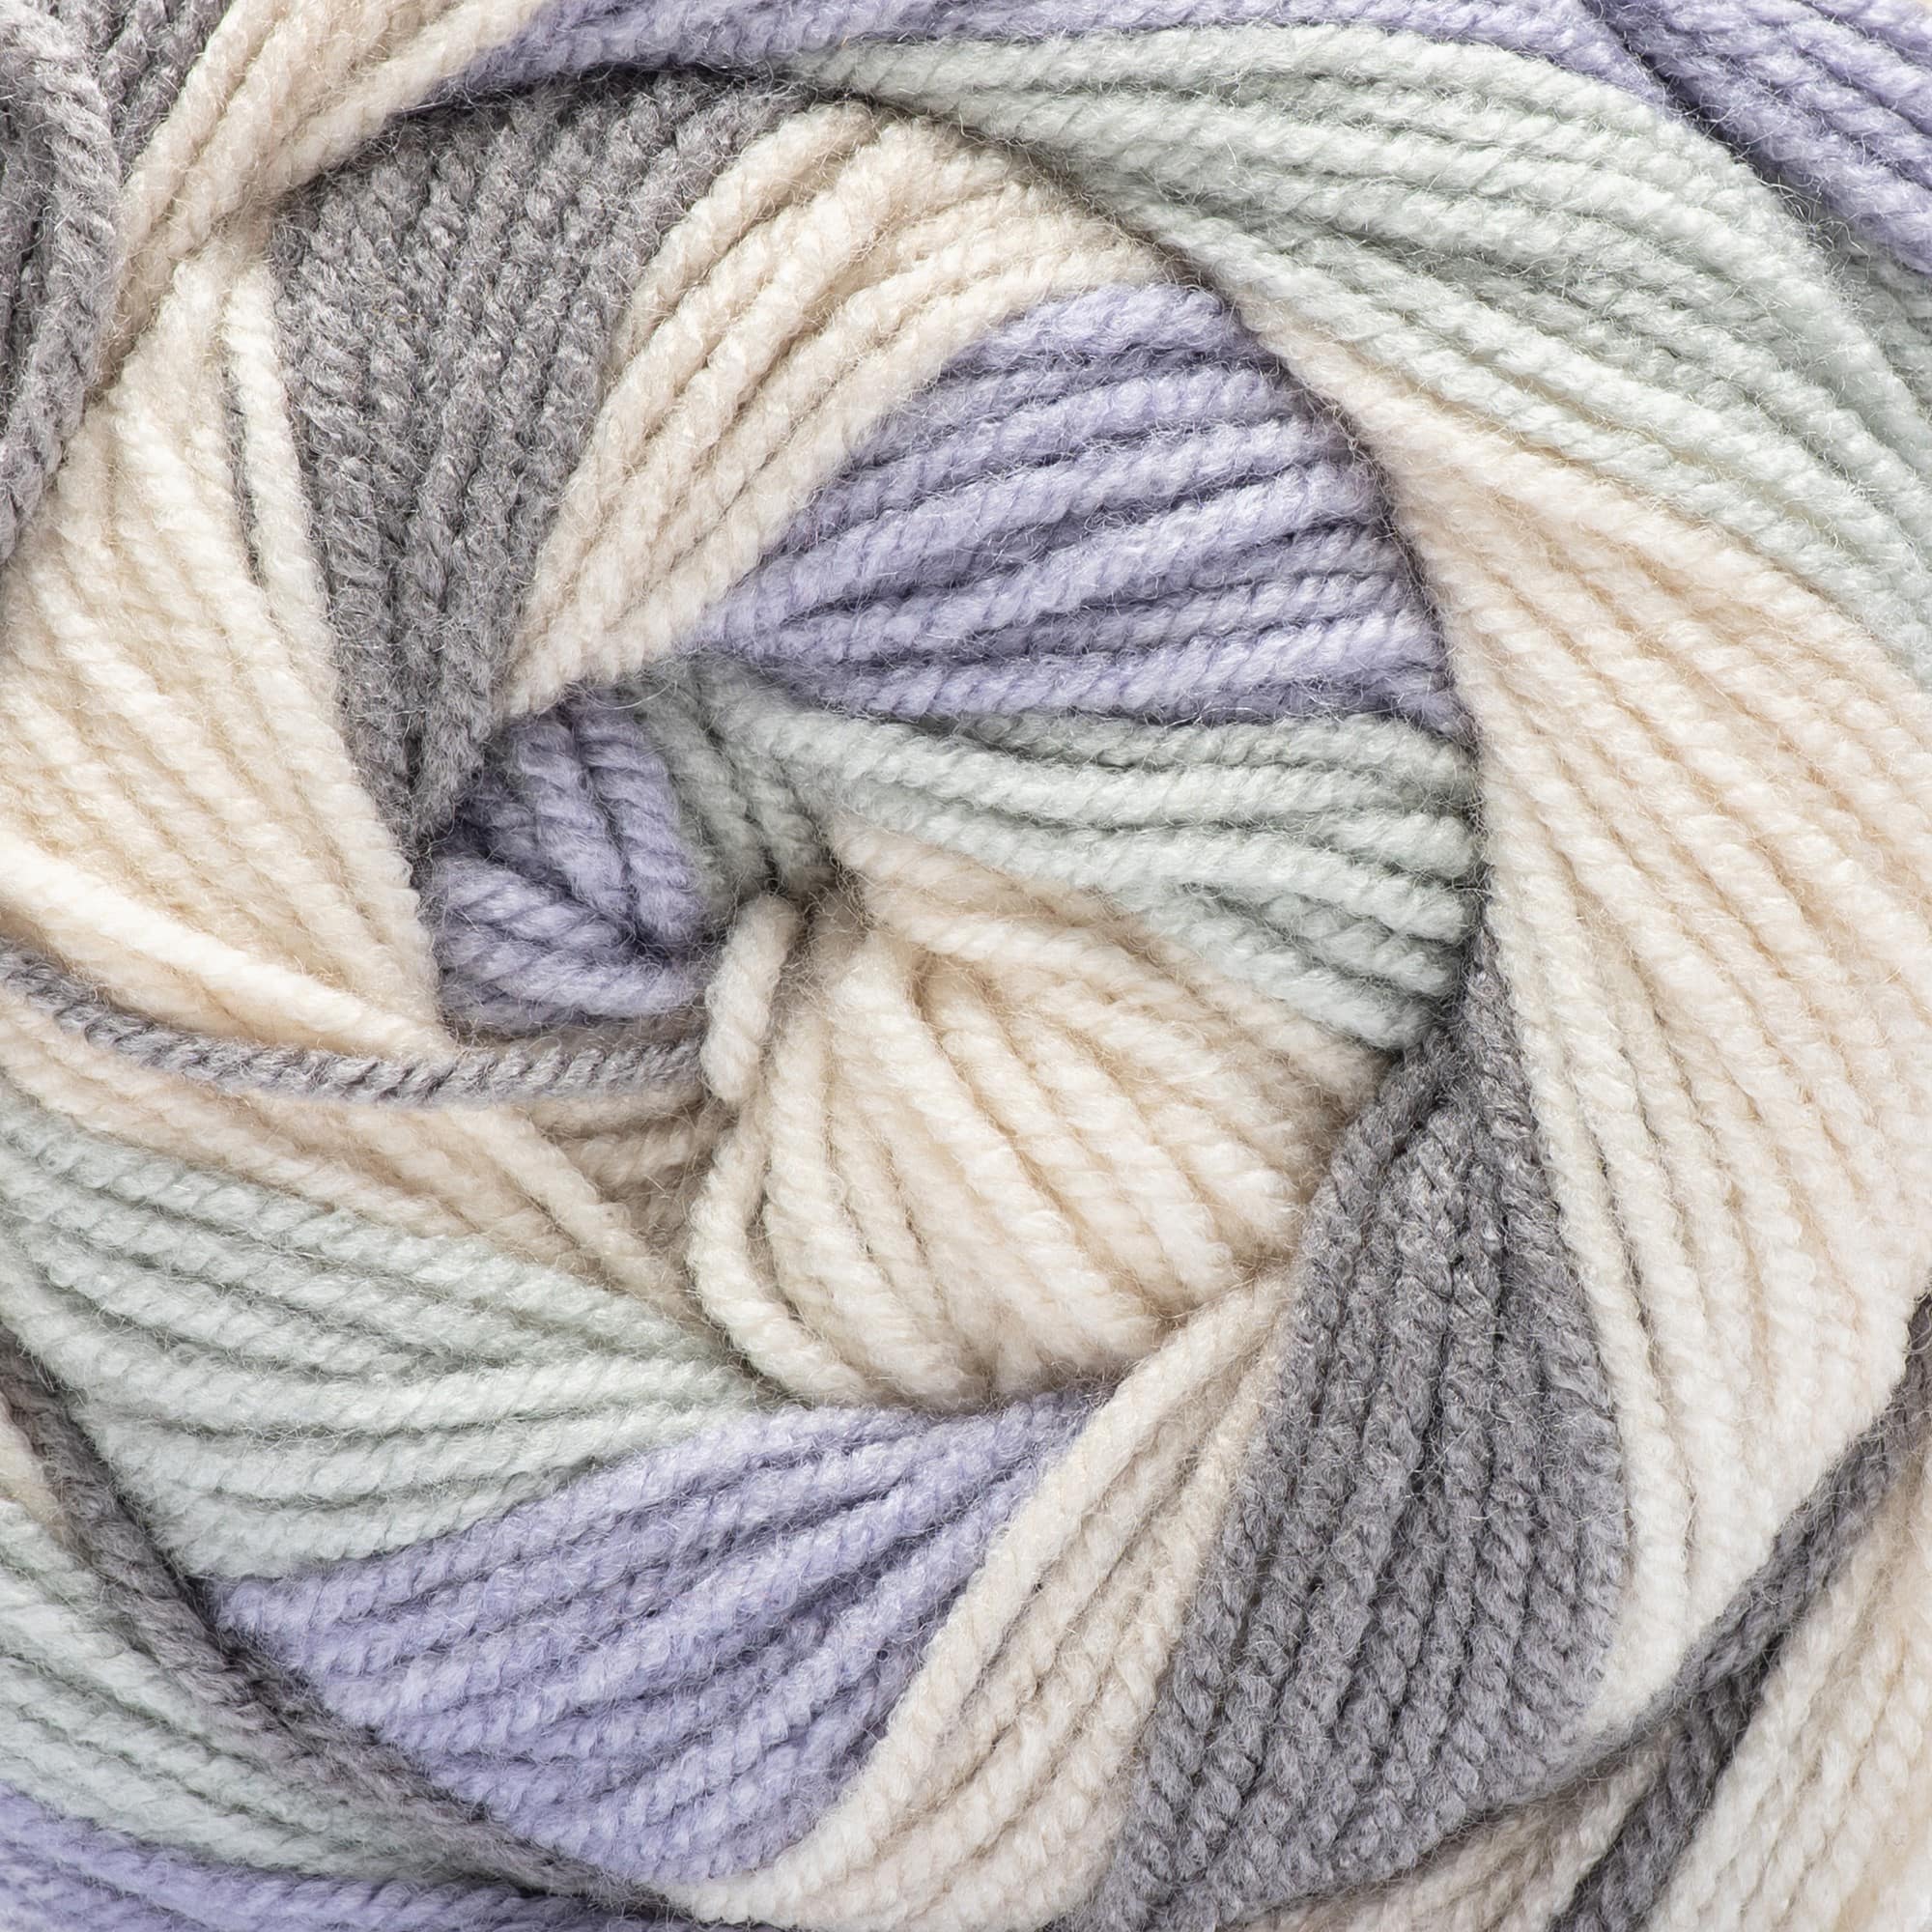 Caron Cinnamon Swirl Cakes Crochet Yarn in Marble | Size: 454g/16oz | Pattern: Crochet | by Yarnspirations